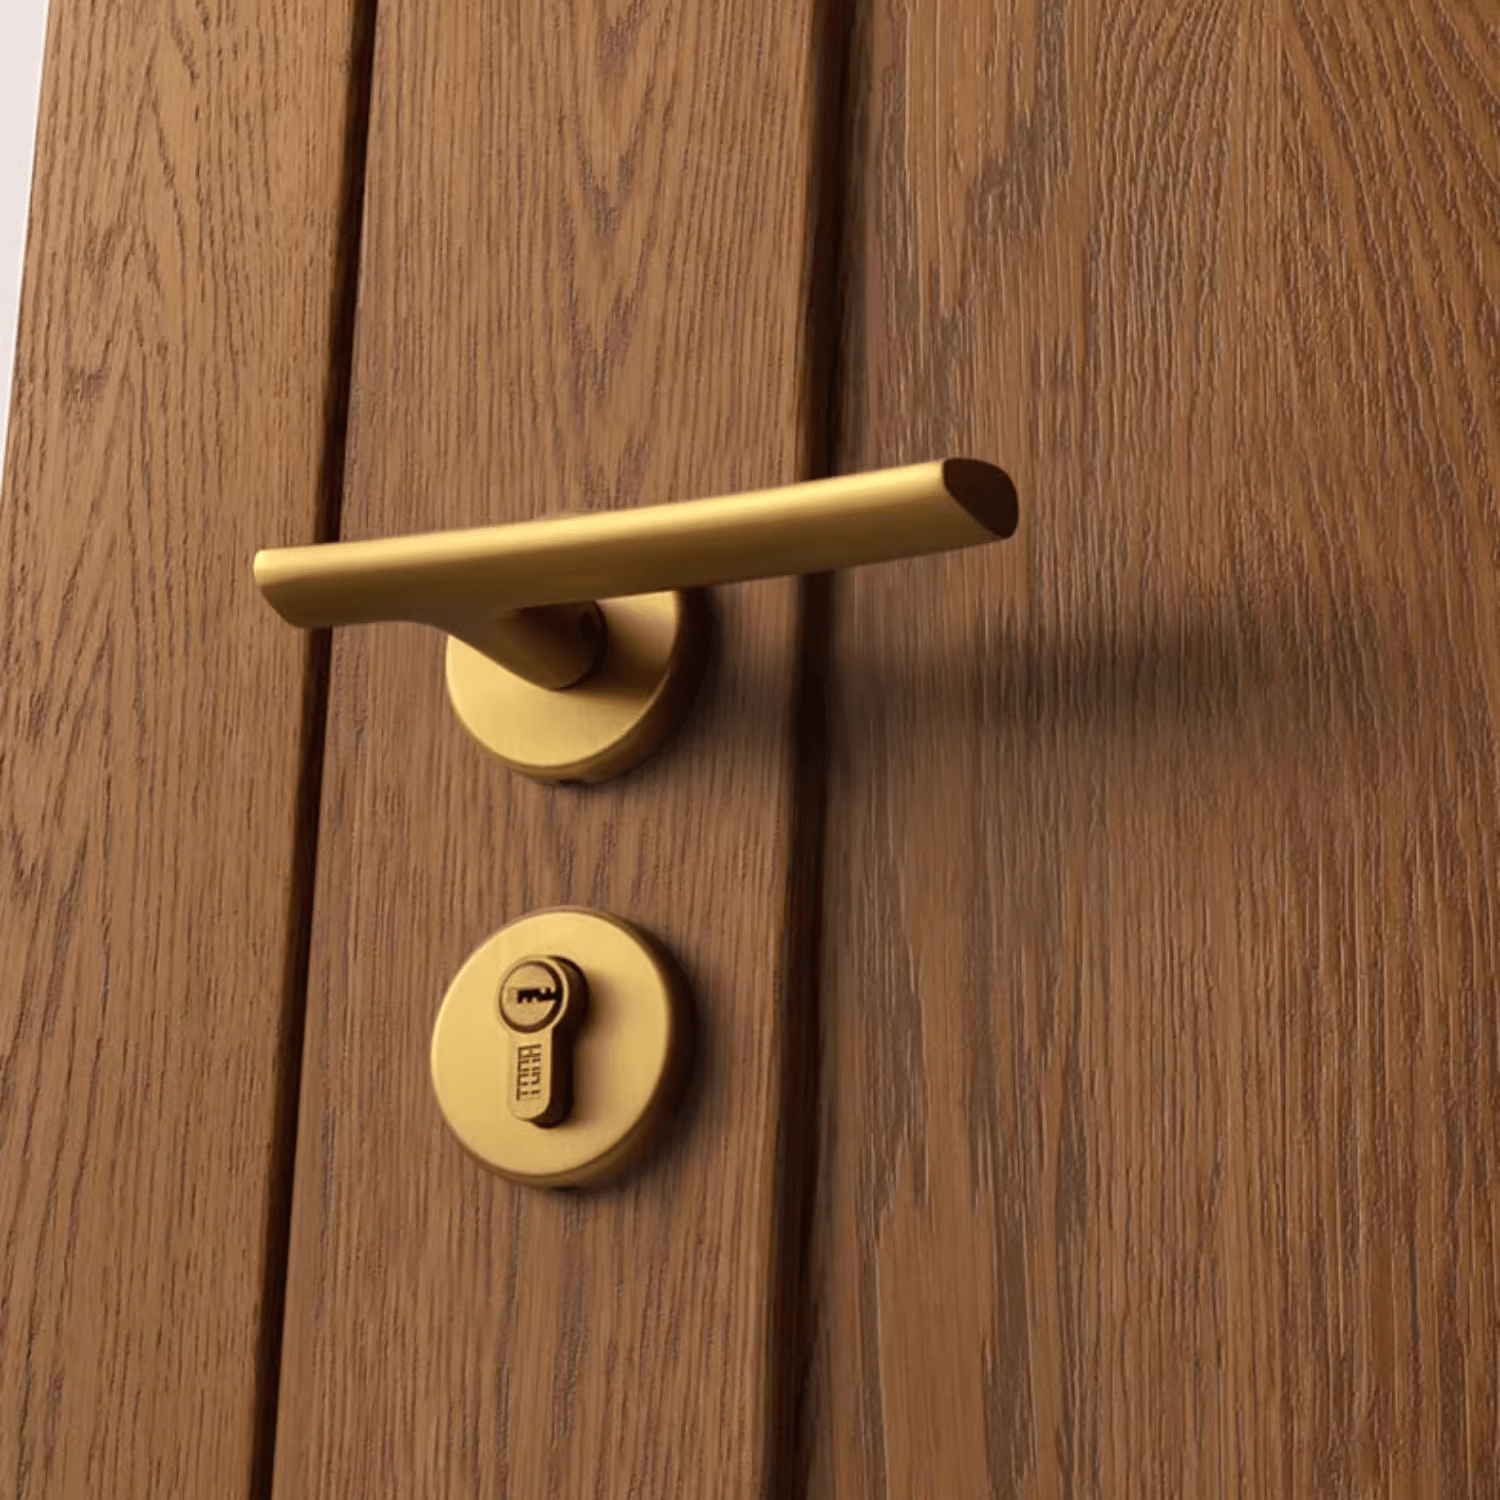 Goo-Ki Branches Pure Copper Interior Door Lock Bedroom Silent Lock for Home